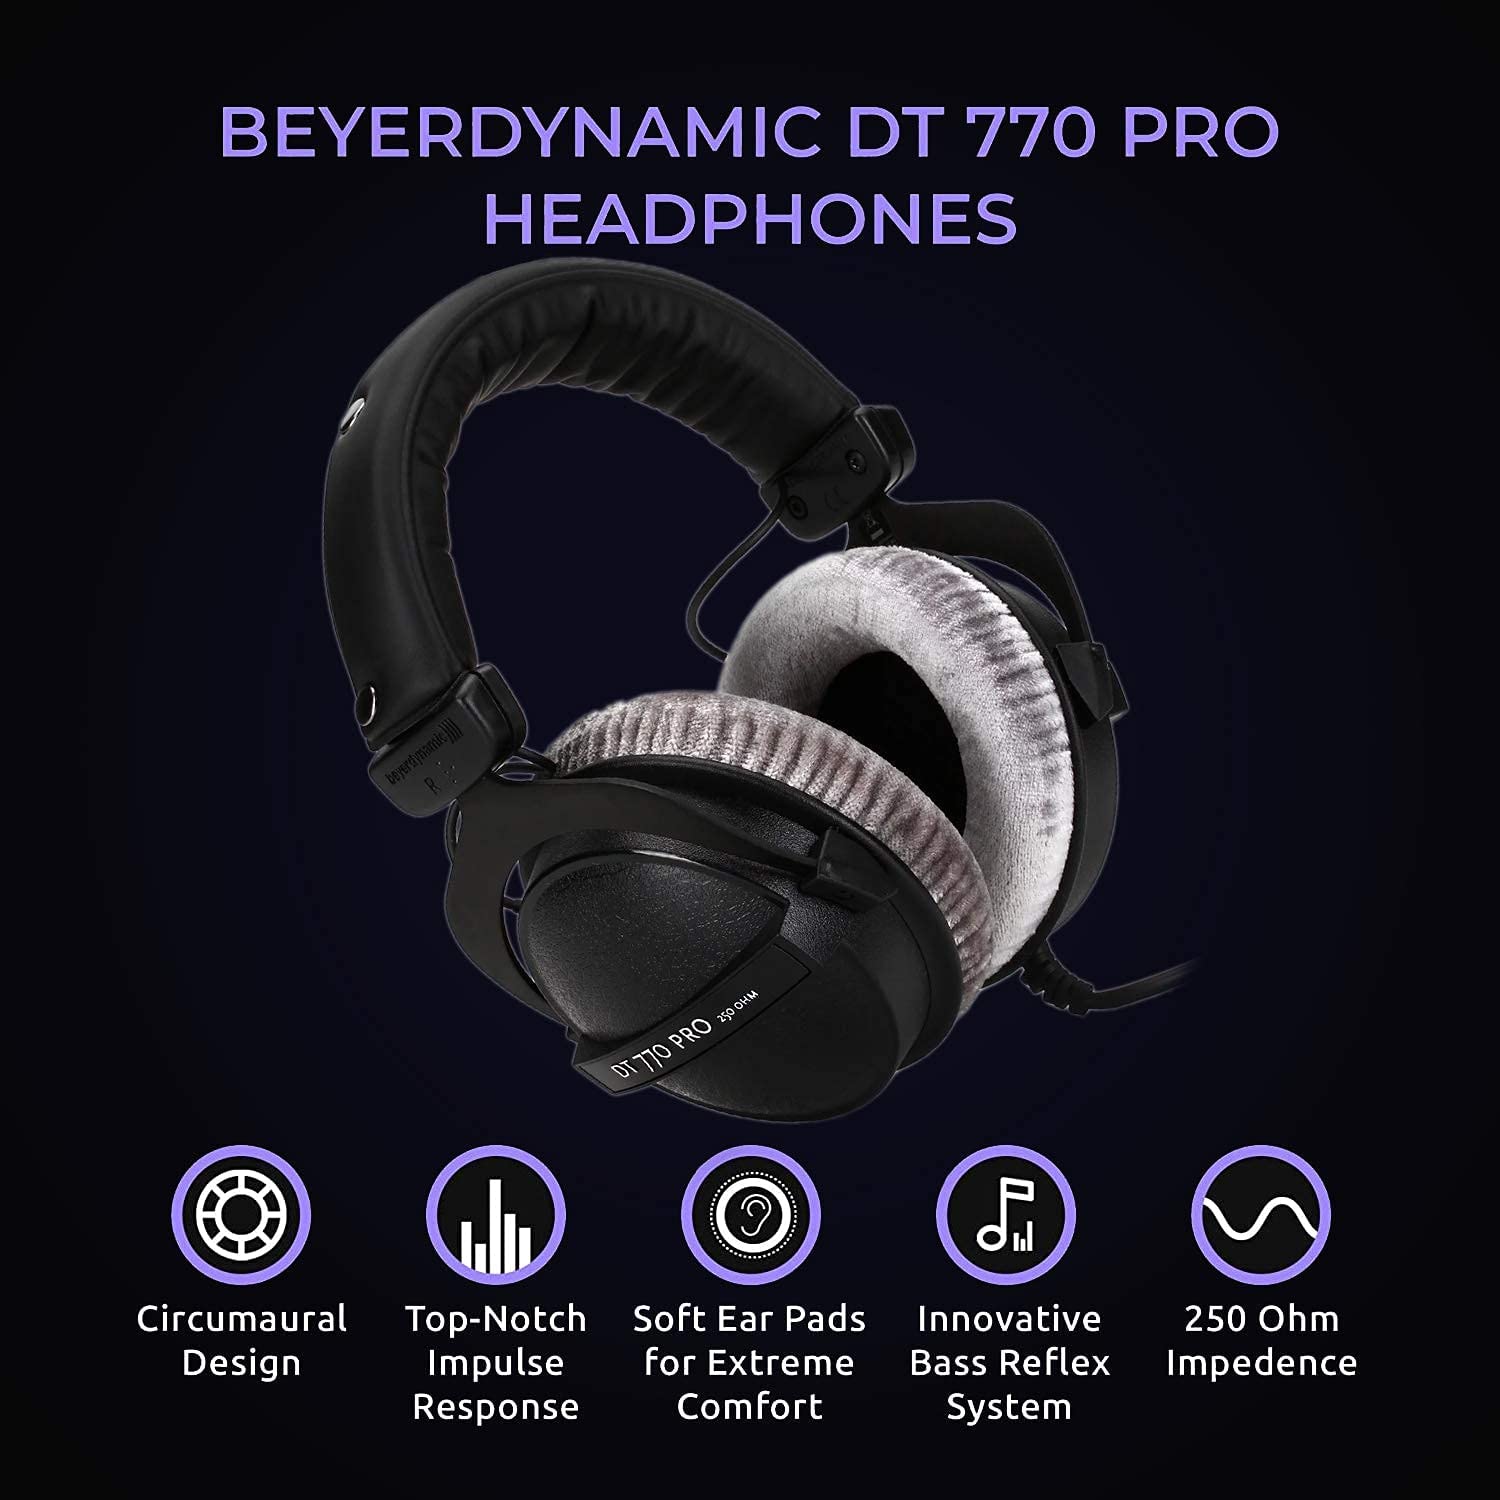 Beyerdynamic DT 770 PRO 250 Ohm Over-Ear Studio Headphones in Black for Studio Use - image 2 of 6